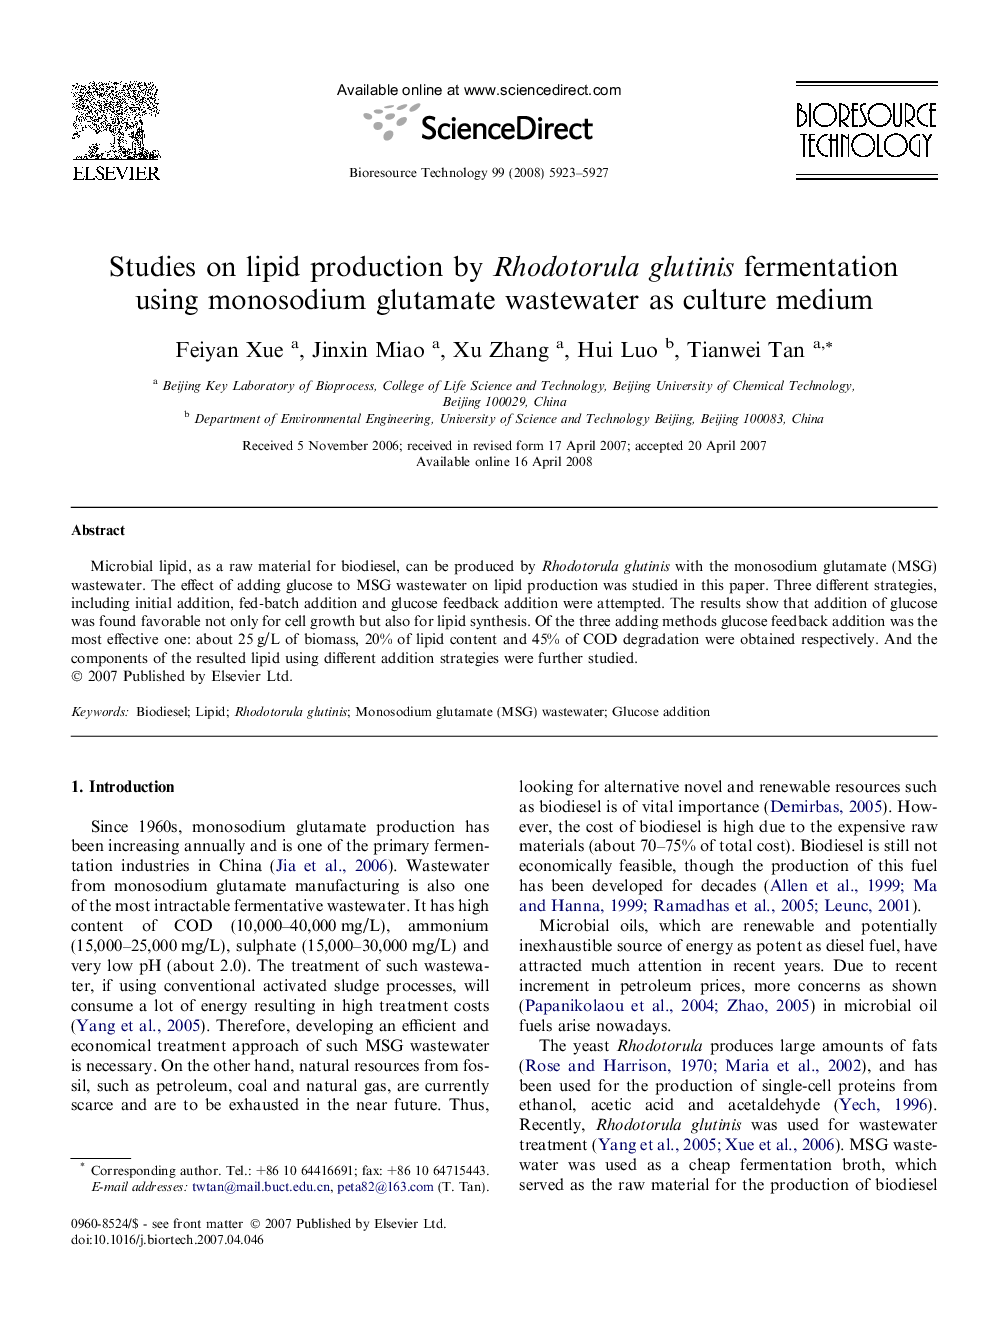 Studies on lipid production by Rhodotorula glutinis fermentation using monosodium glutamate wastewater as culture medium